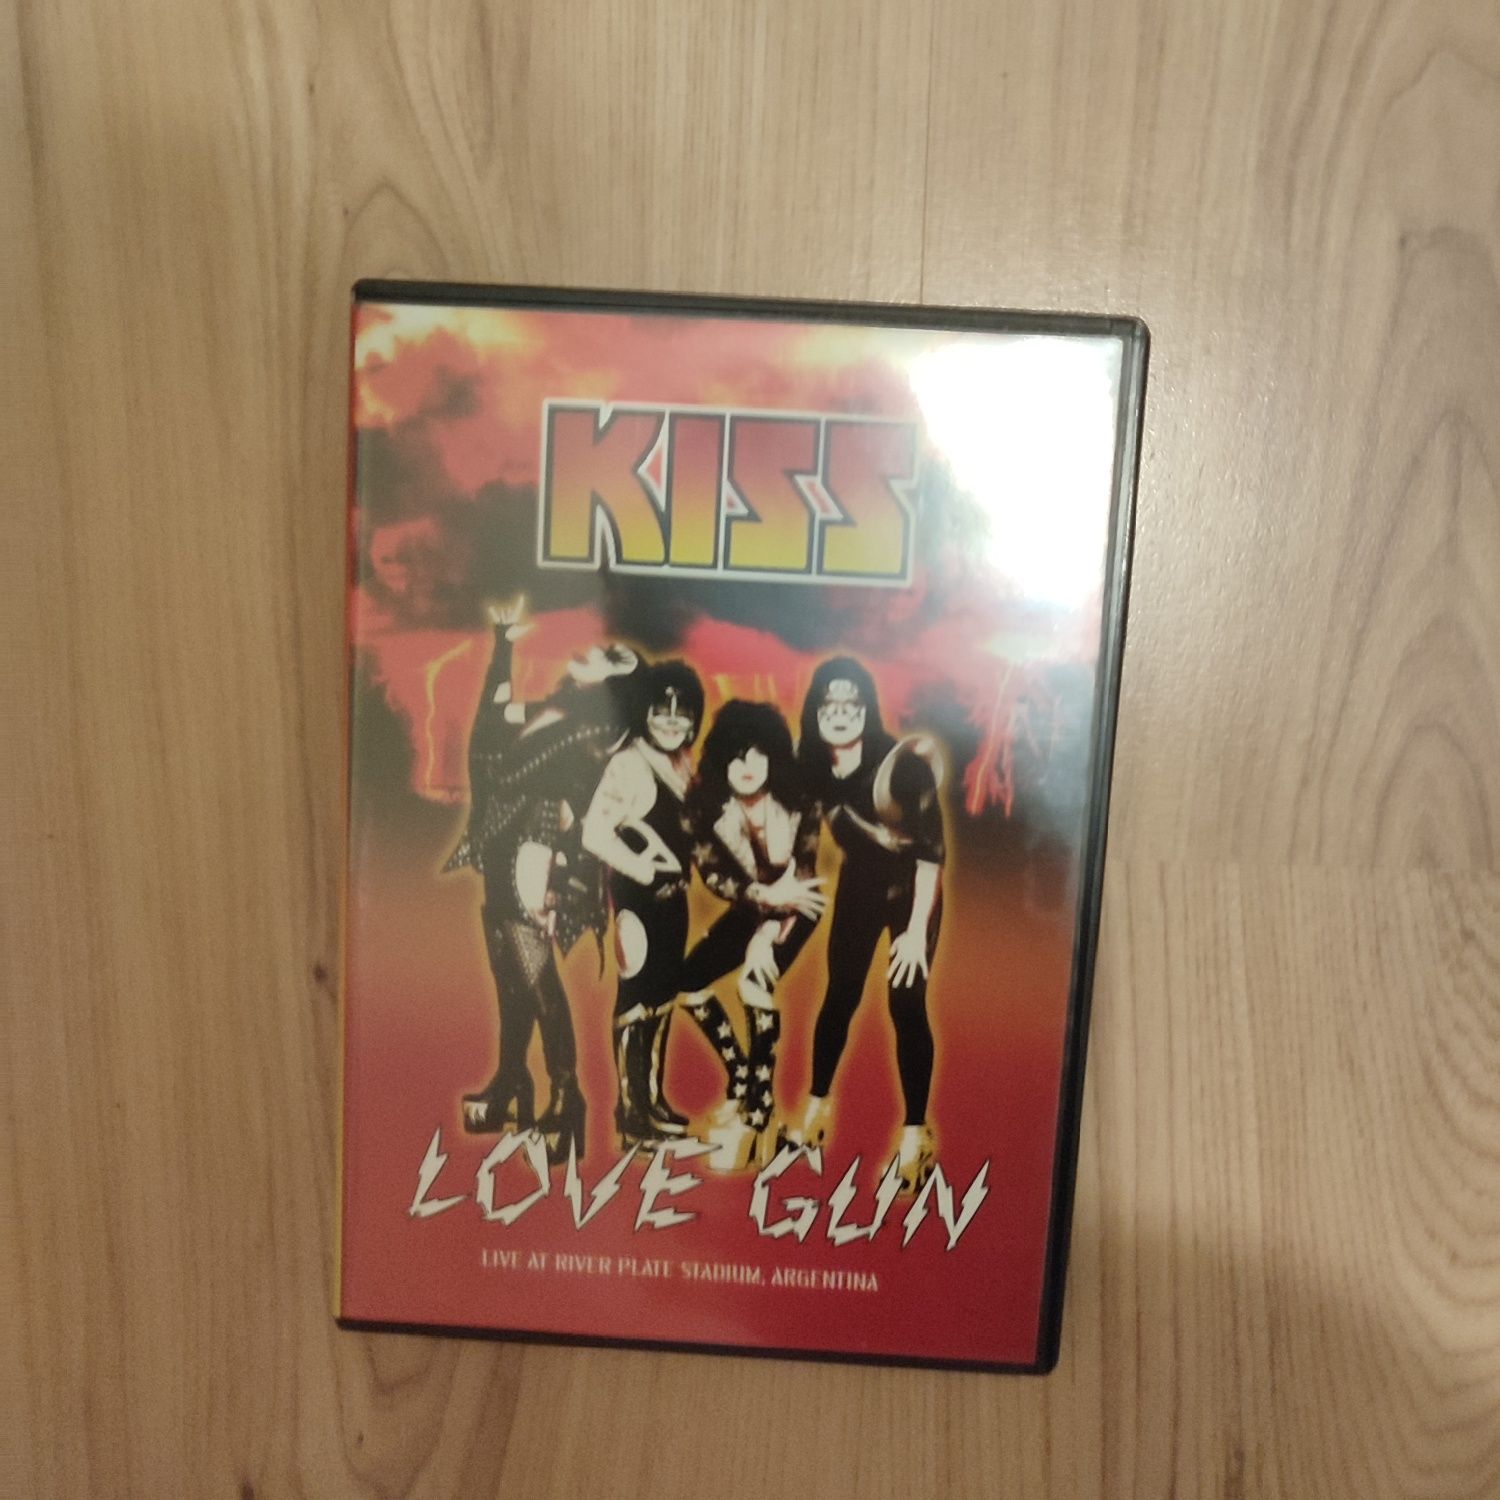 Płyta DVD Kiss - Love Gun live, koncert
Stan bardzo dobry, mało używan